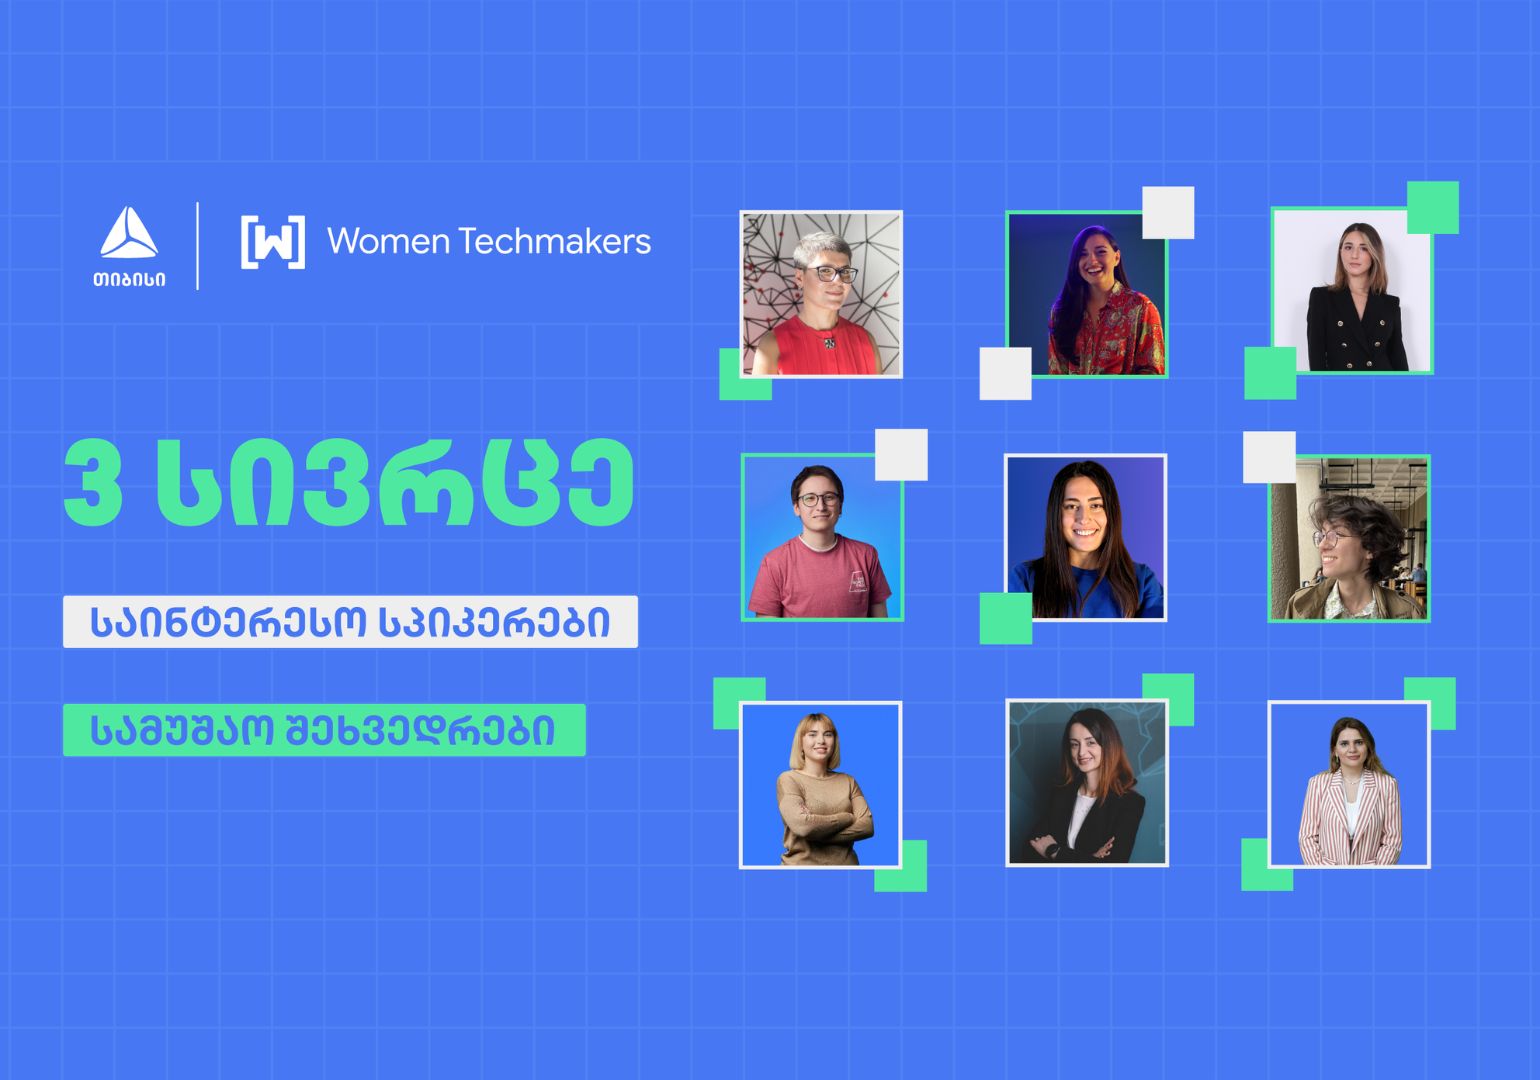 Google-ის ინიციატივა Women Techmakers თიბისისთან პარტნიორობით ხვალ ტექღონისძიებას ჩაატარებს